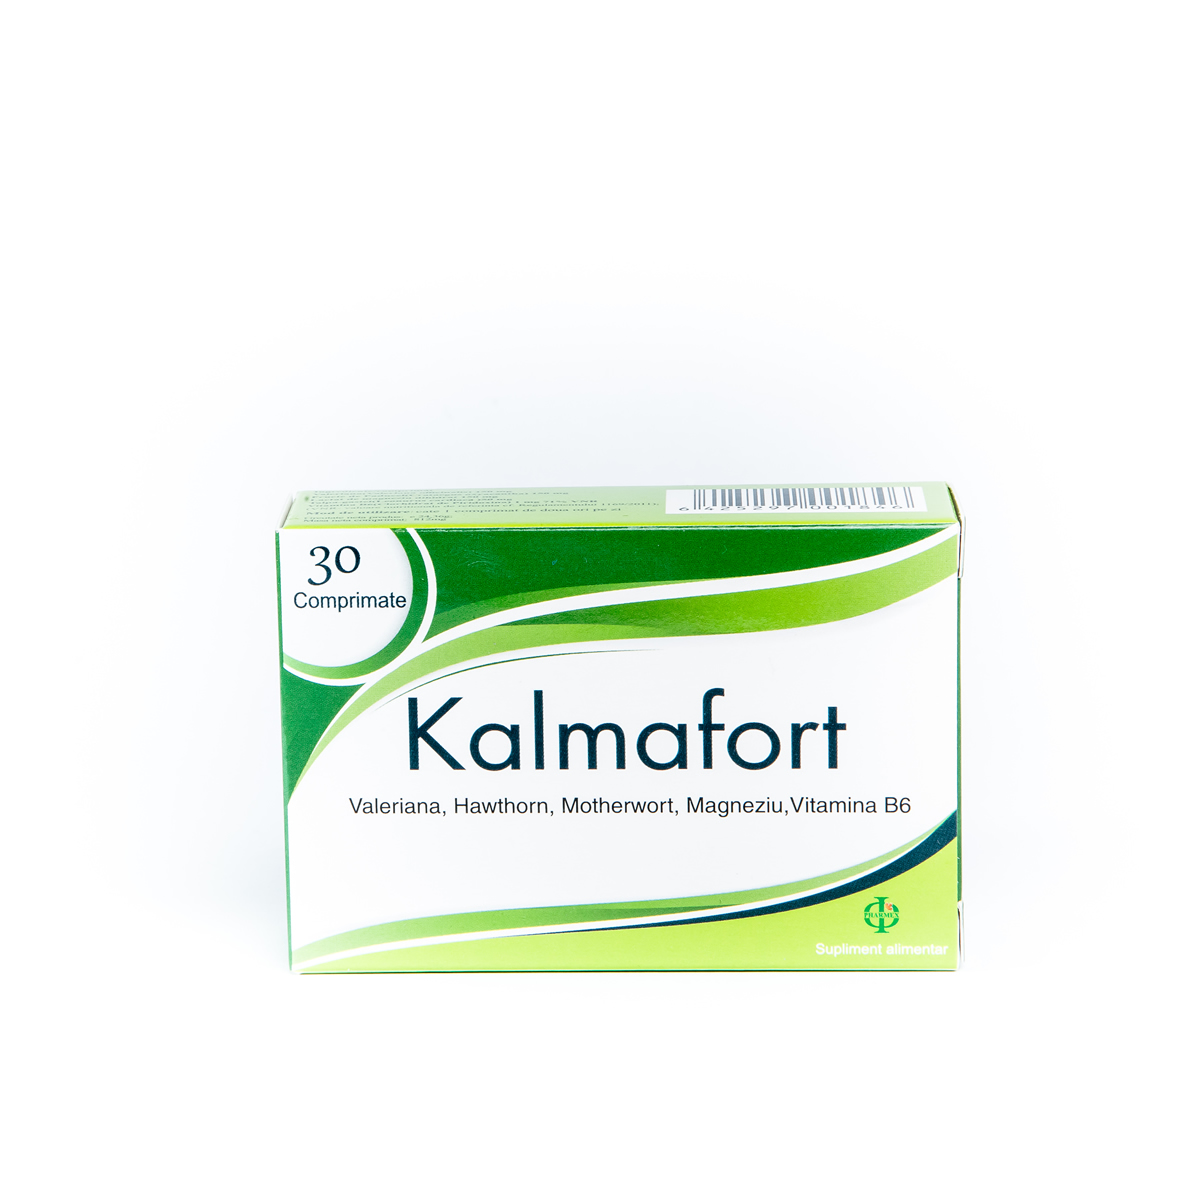 Antistres - Kalmafort, 30 comprimate, Pharmex, sinapis.ro